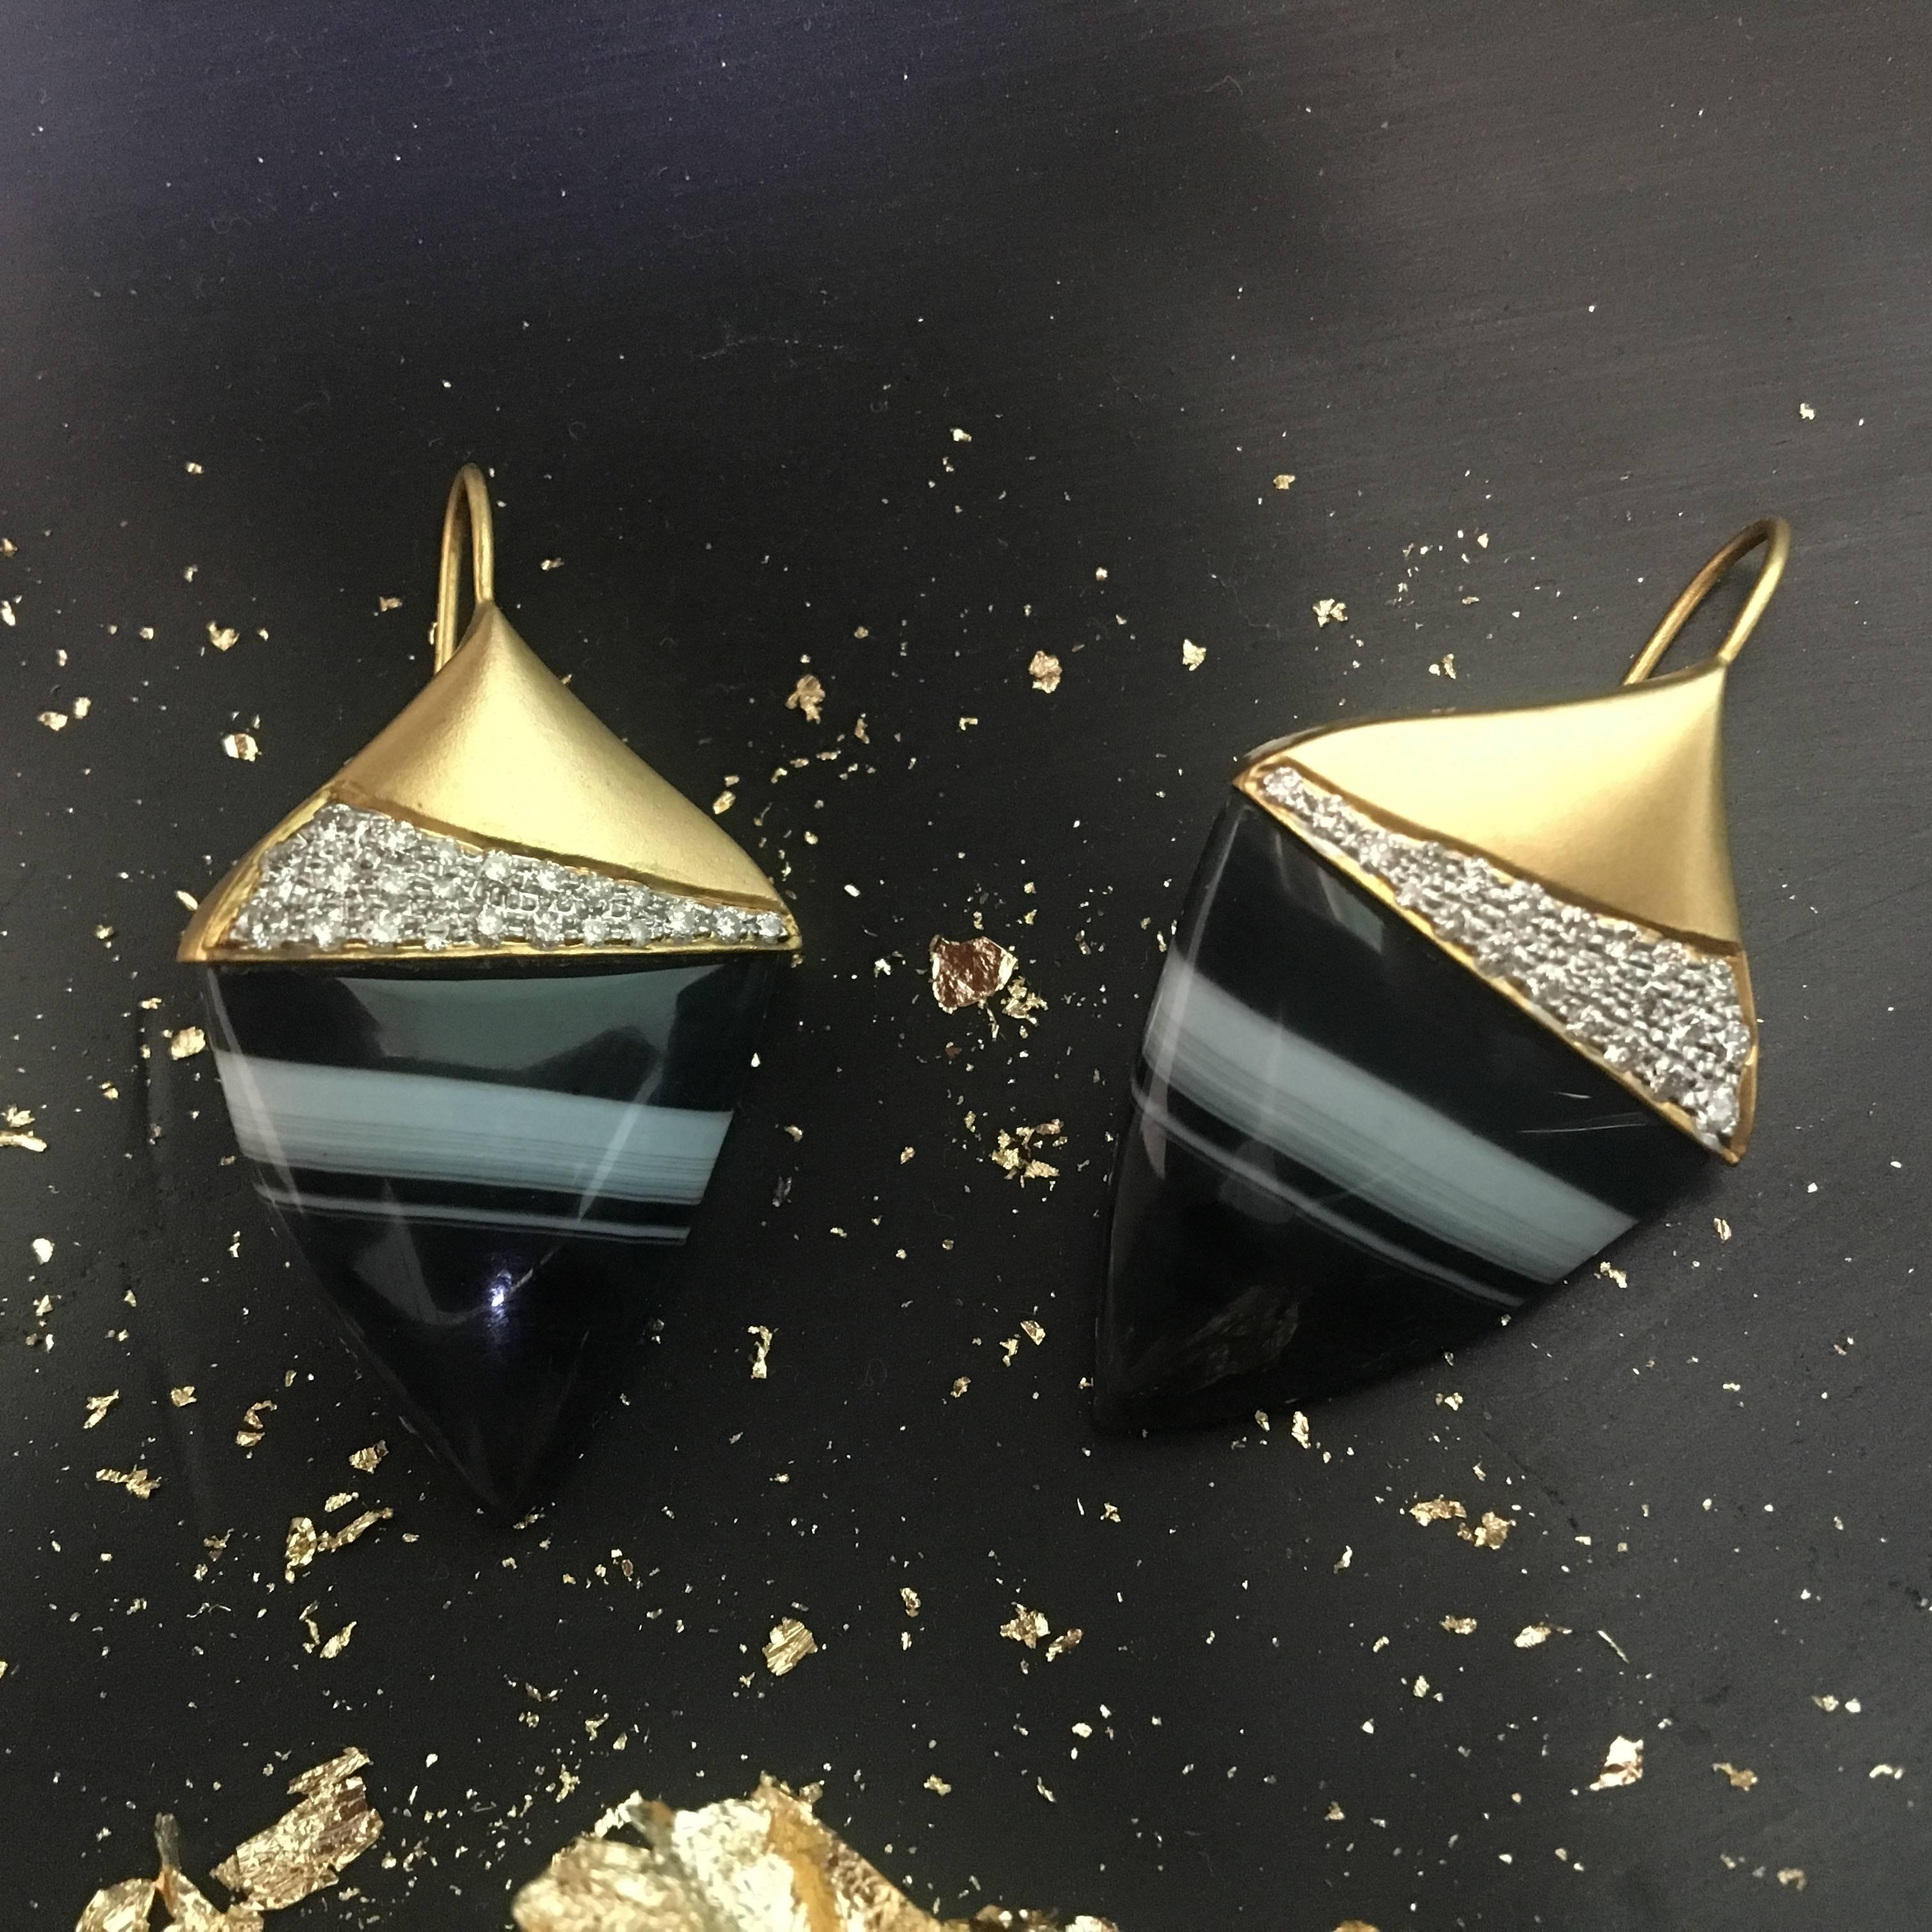 Artist Lauren Harper Tuxedo Agate .72 Carat Diamonds Gold Earrings